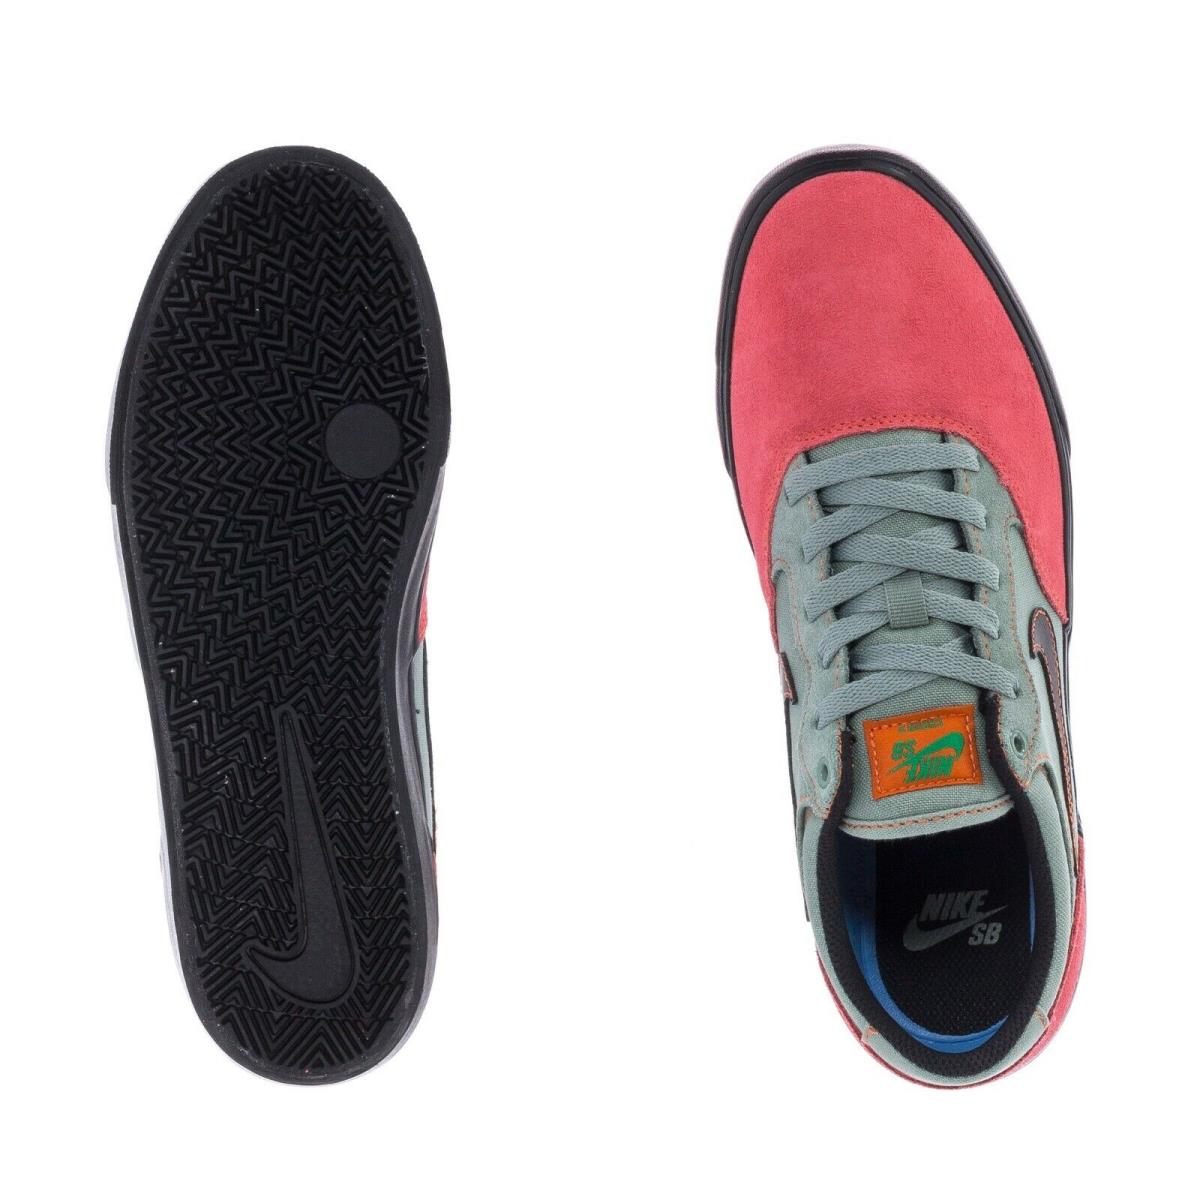 Nike shoes Chron - Multicolor 1